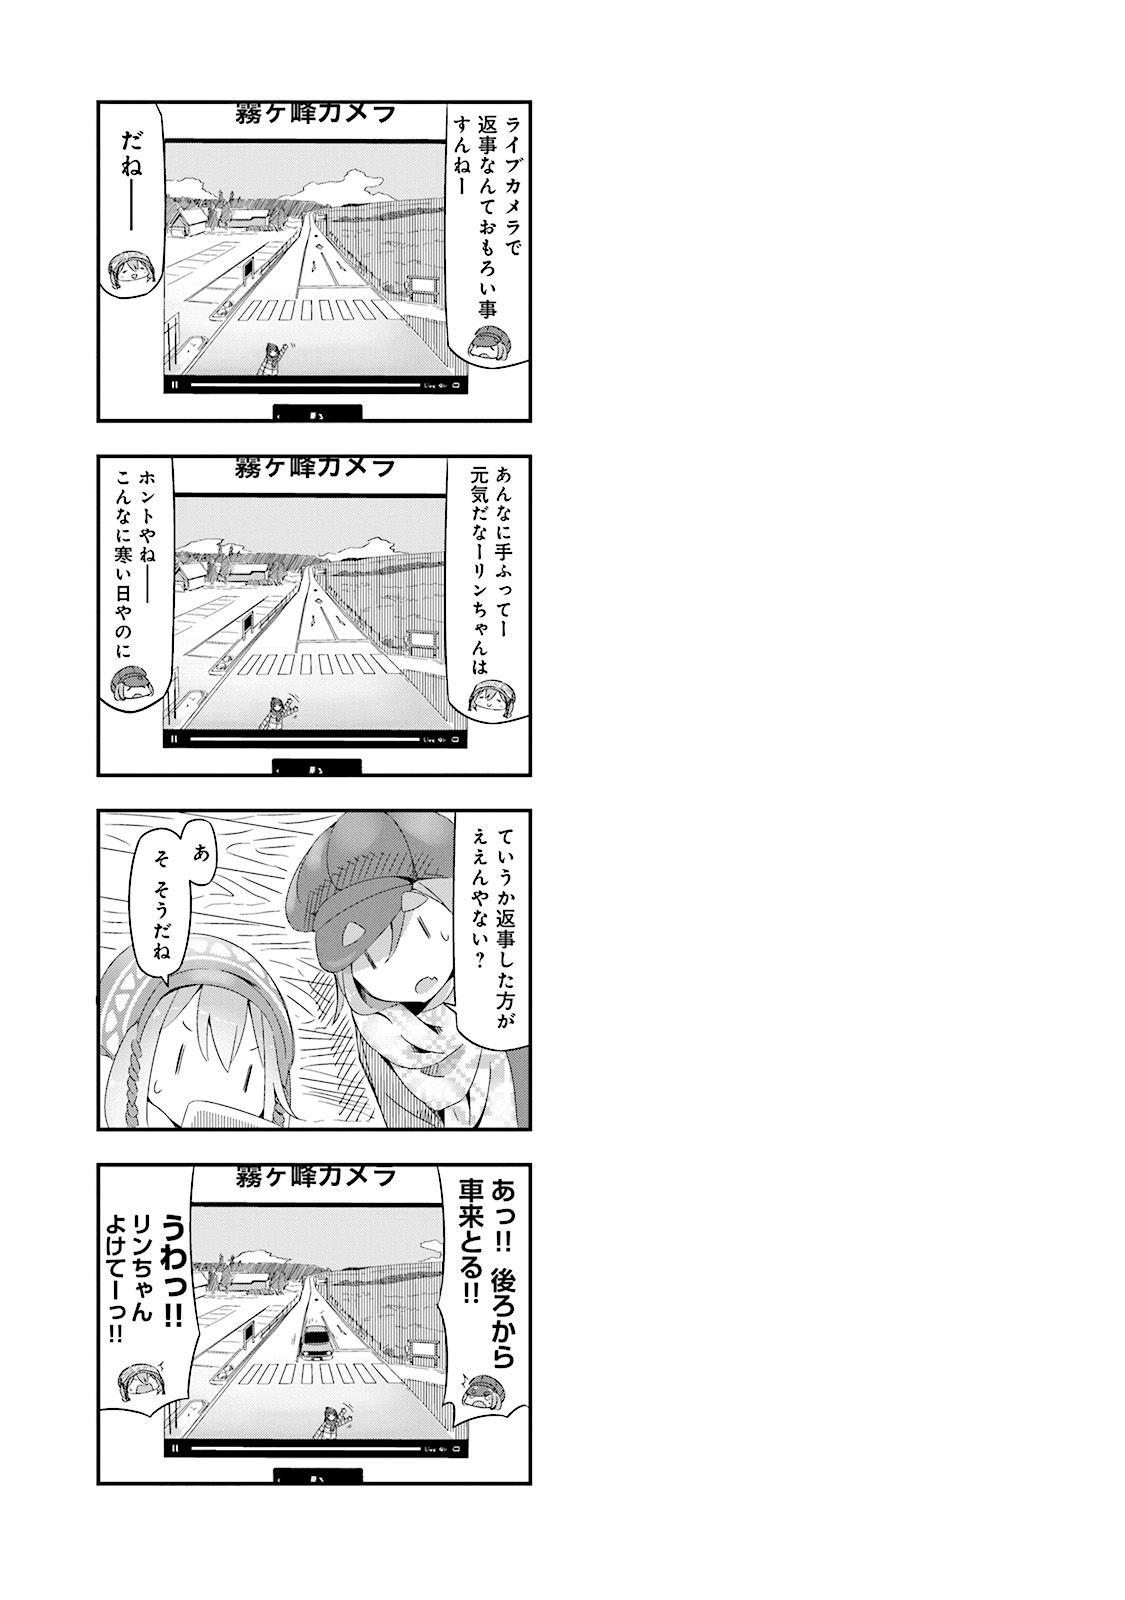 Yuru Camp - Chapter 6 - Page 25